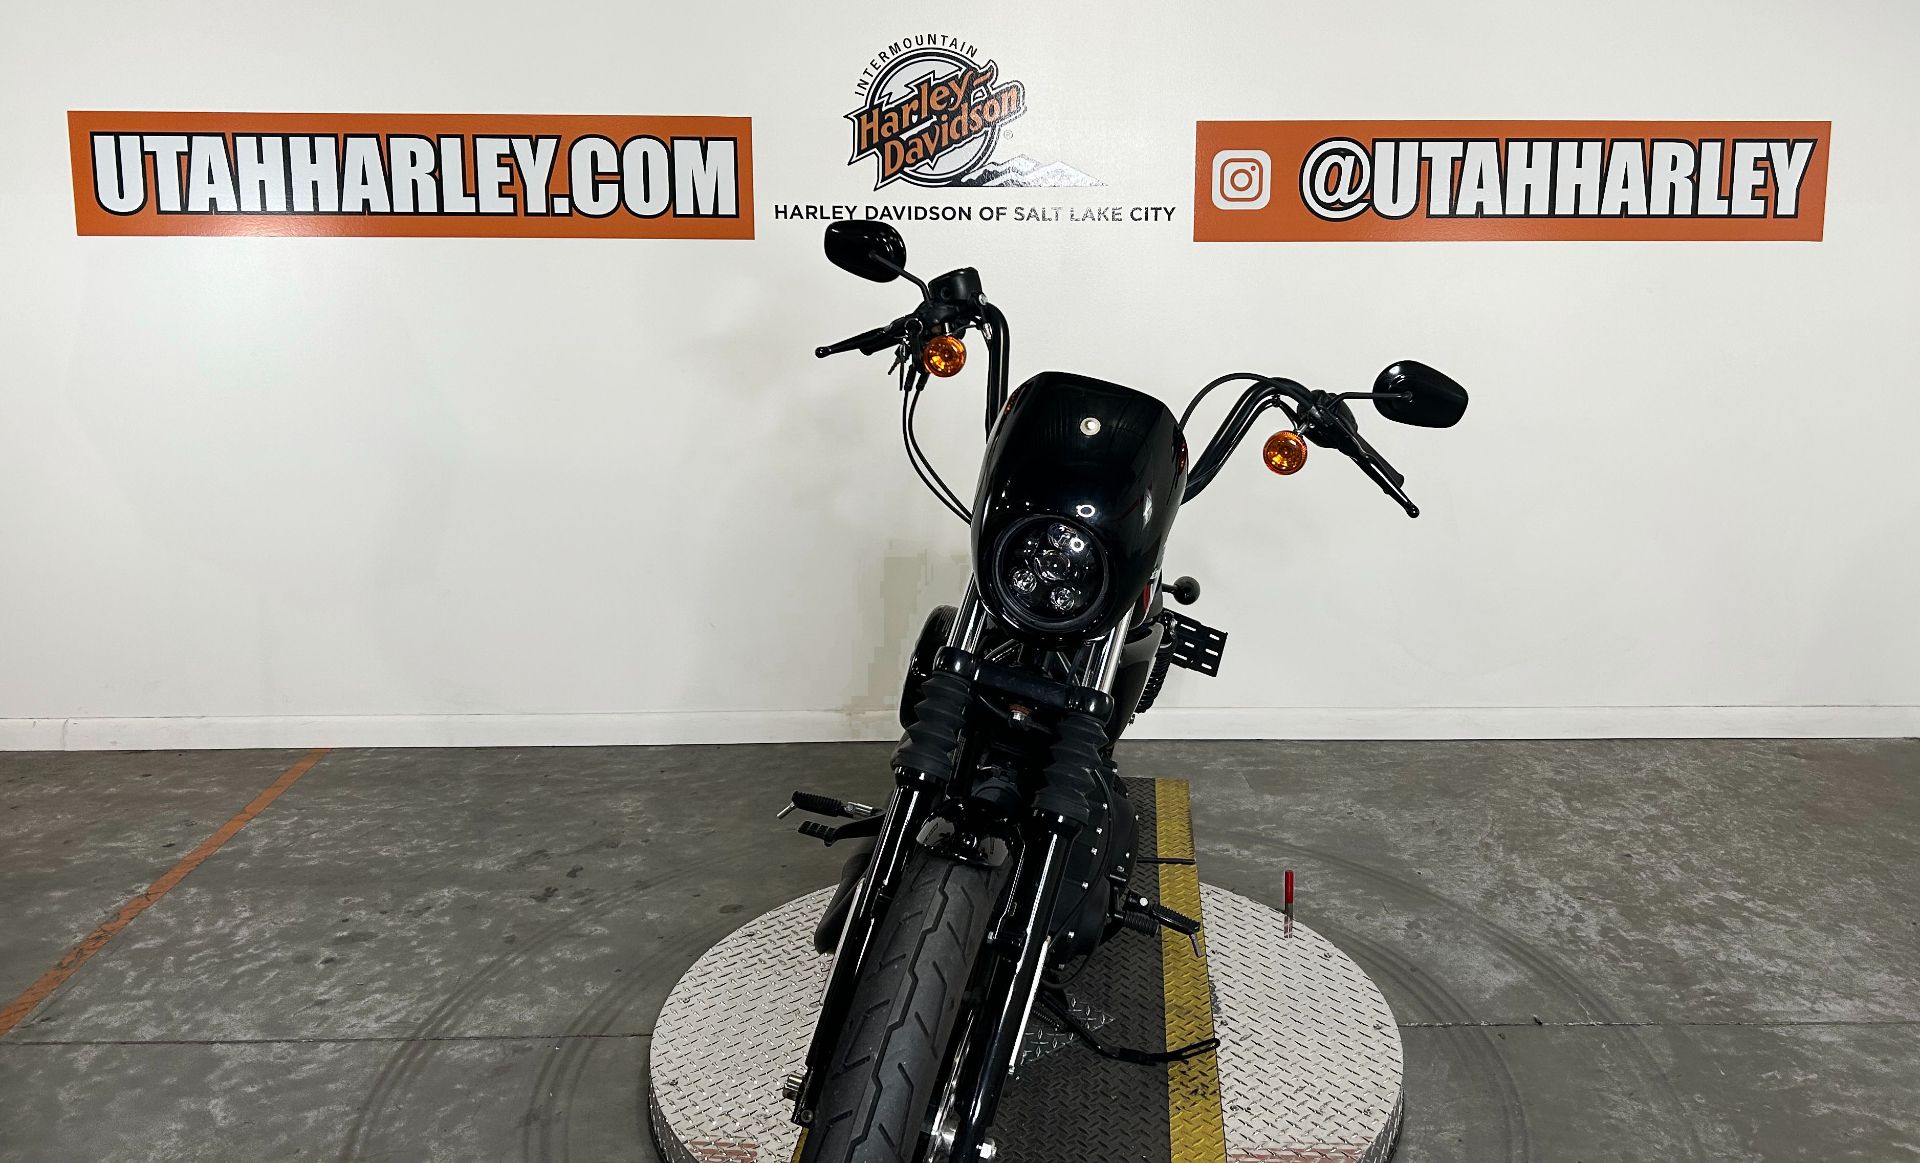 2020 Harley-Davidson Iron 1200™ in Salt Lake City, Utah - Photo 3